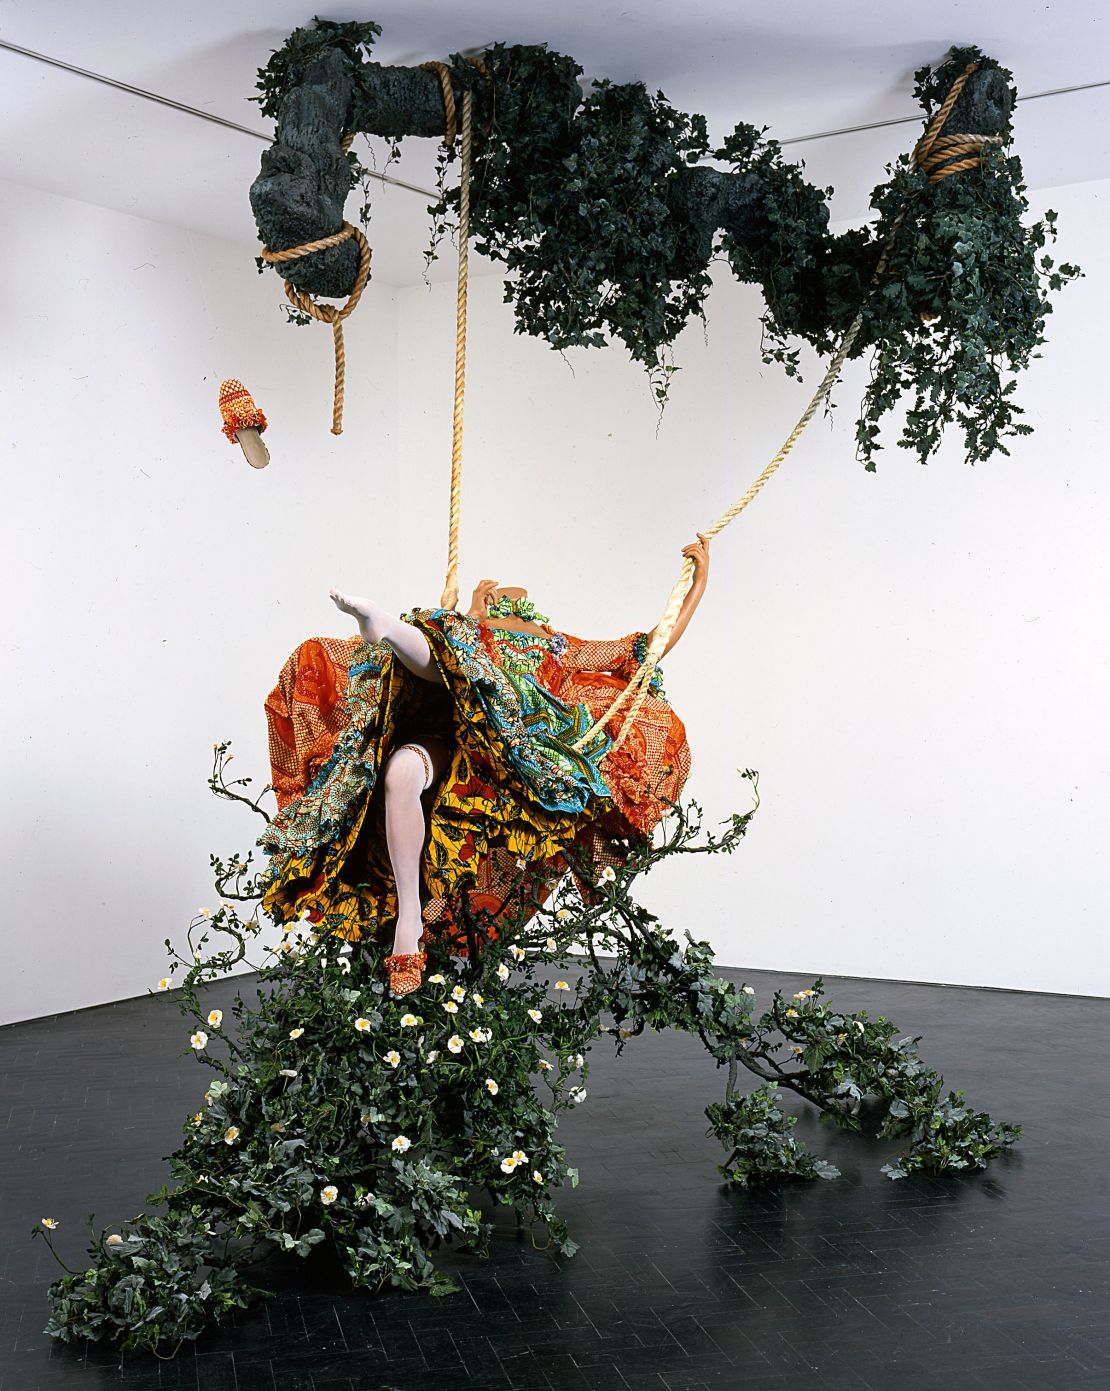 "The Swing (after Fragonard)" (2001) by Yinka Shonibare